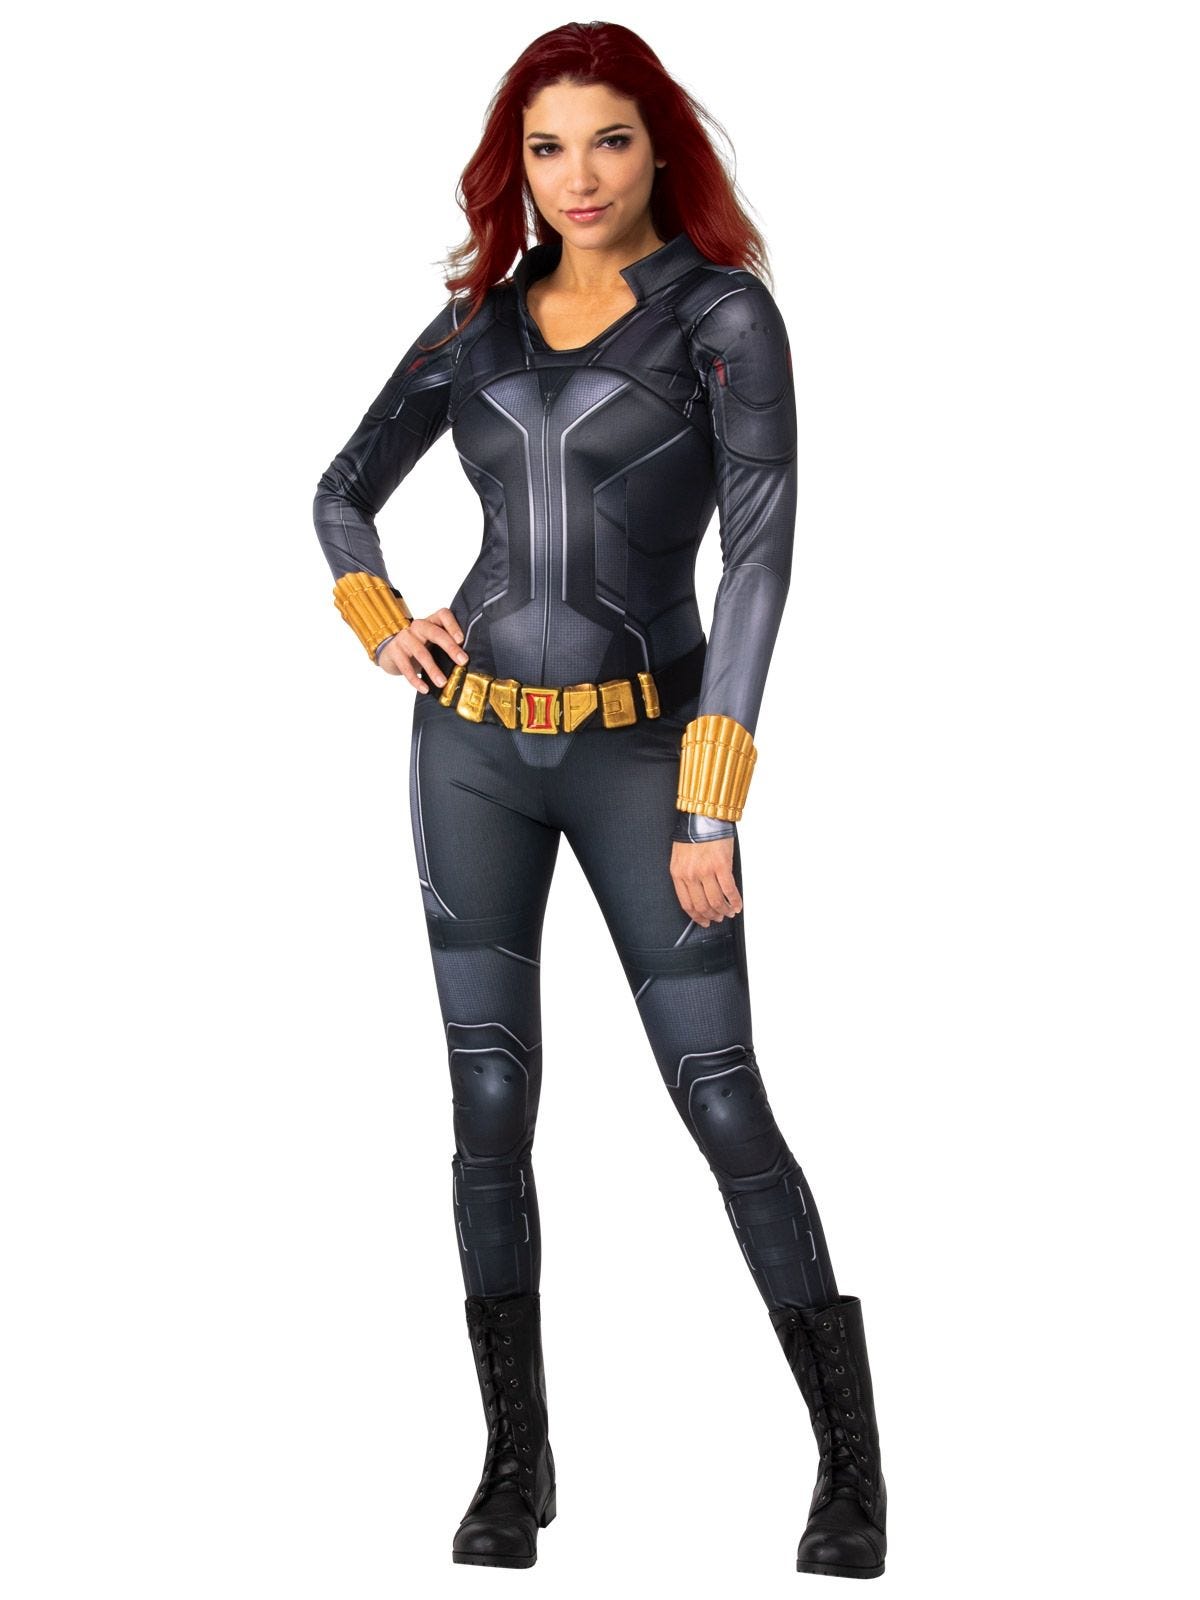 Black Widow Latex Costume cum on